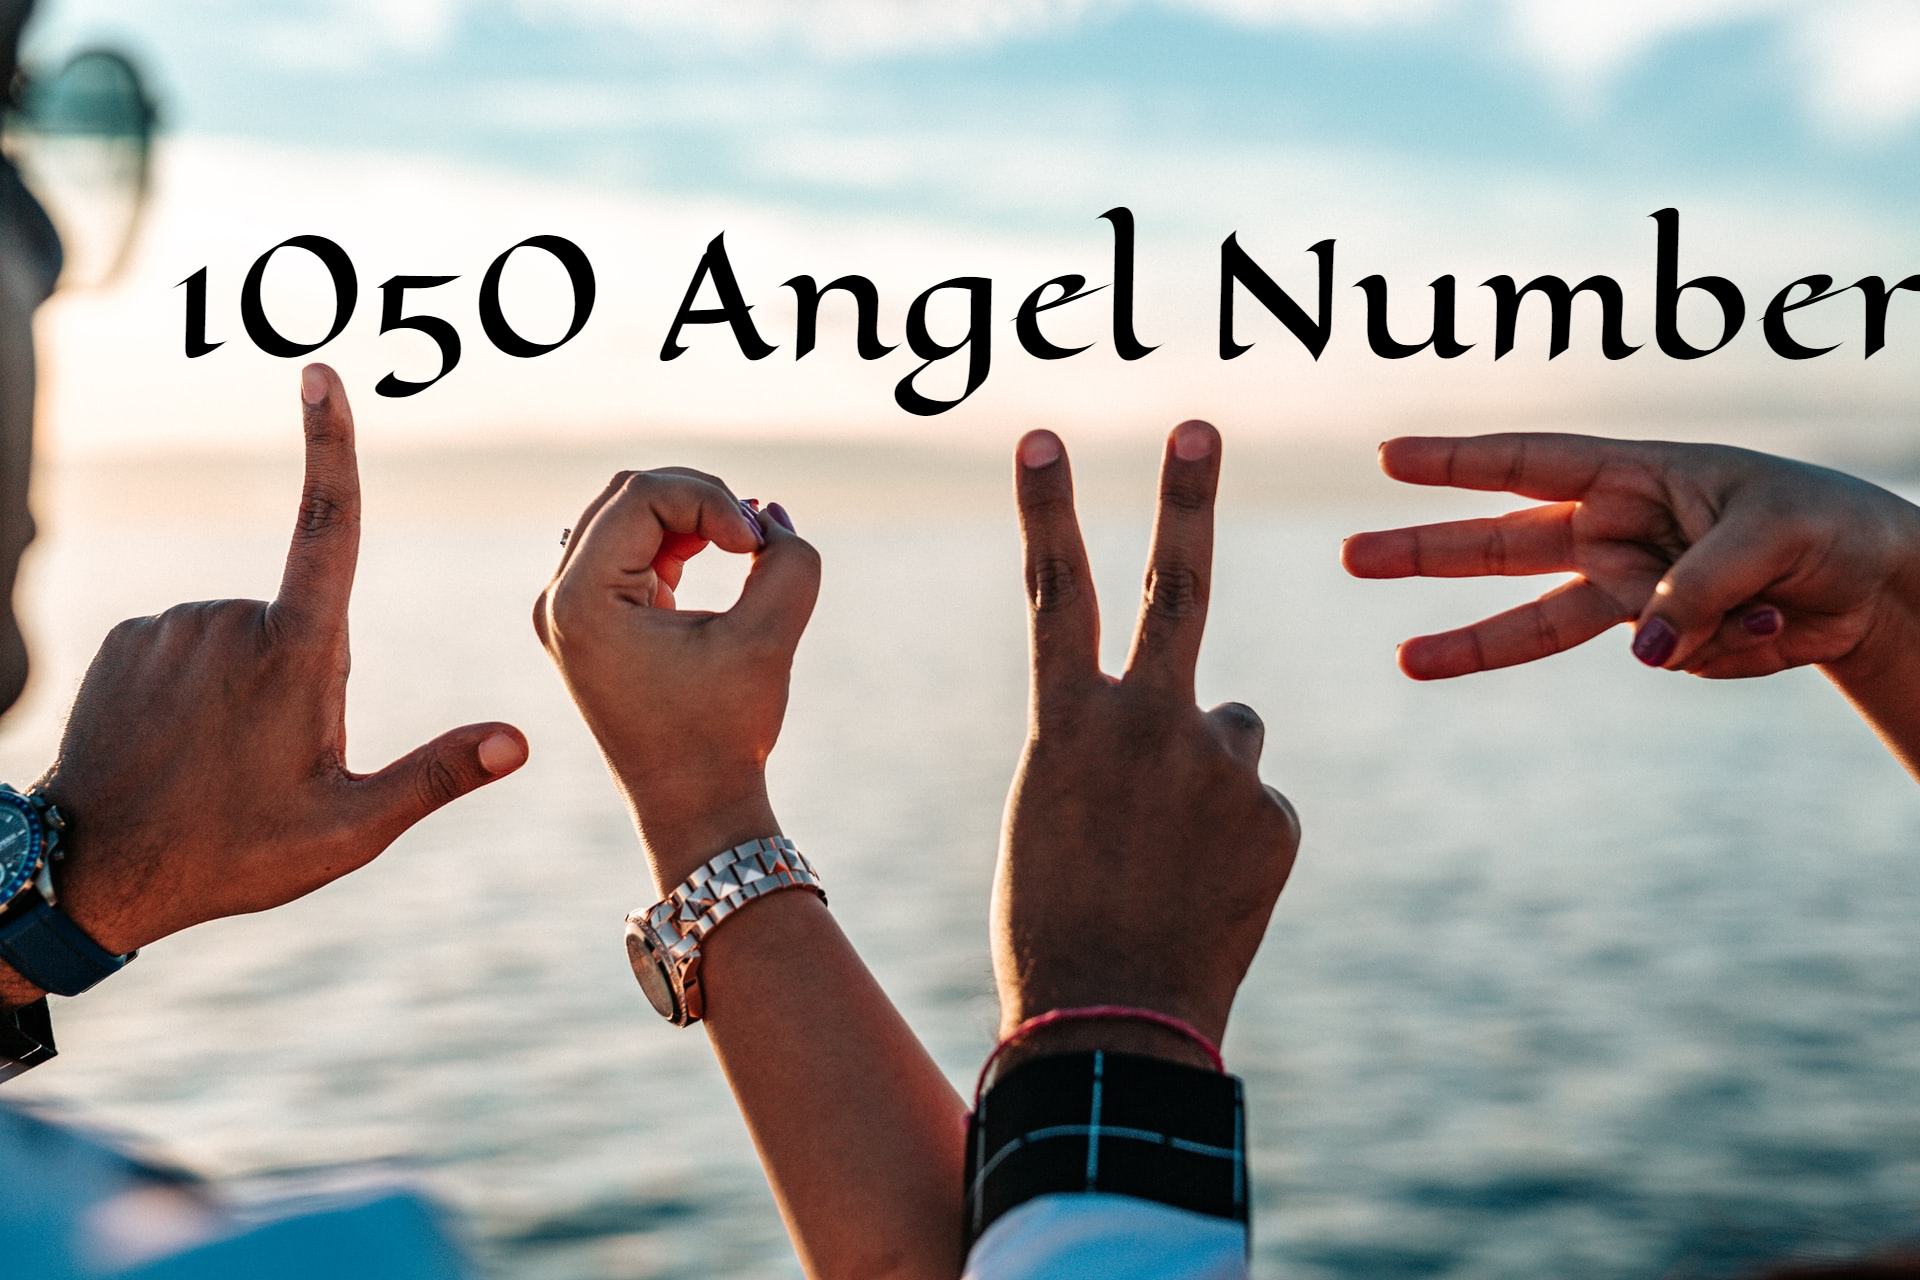 1050 Angel Number - Encourages Progress